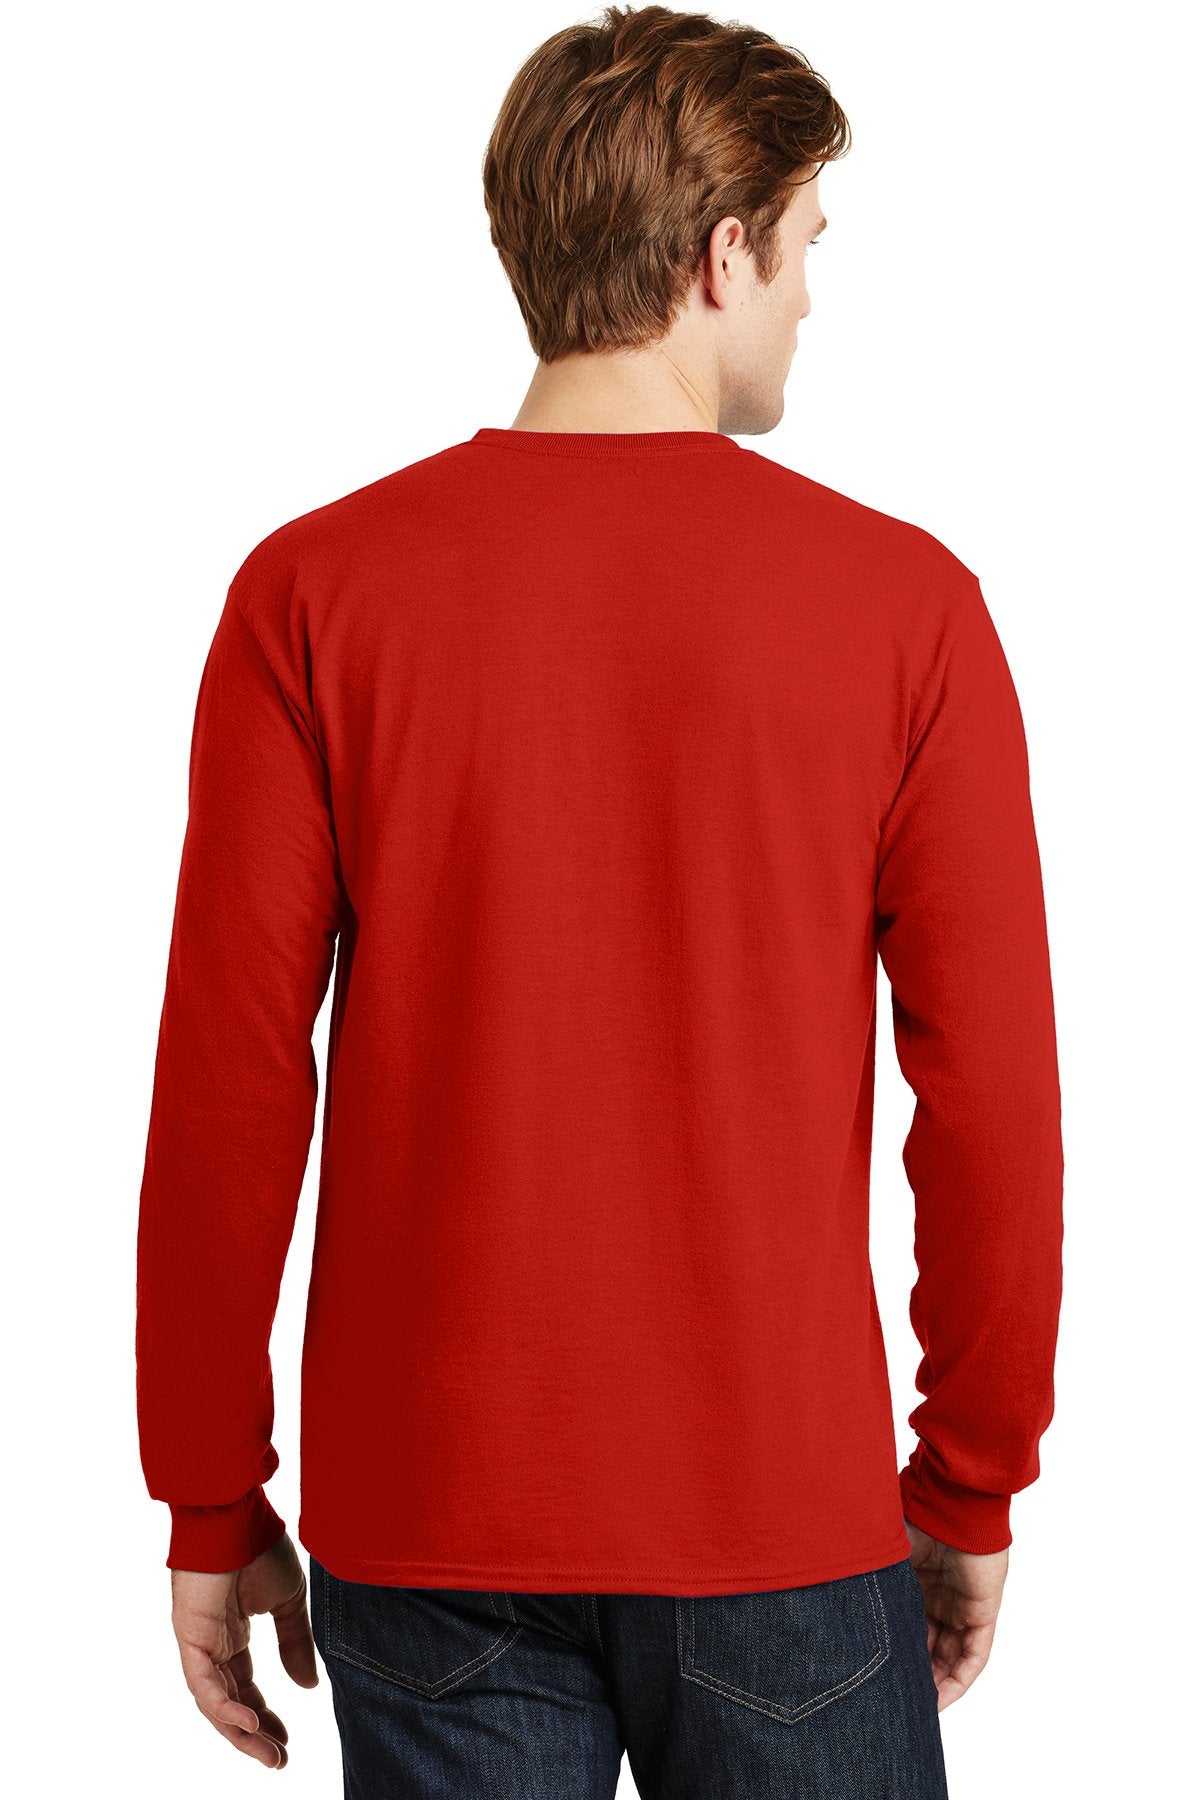 gildan dryblend cotton poly long sleeve t shirt 8400 red